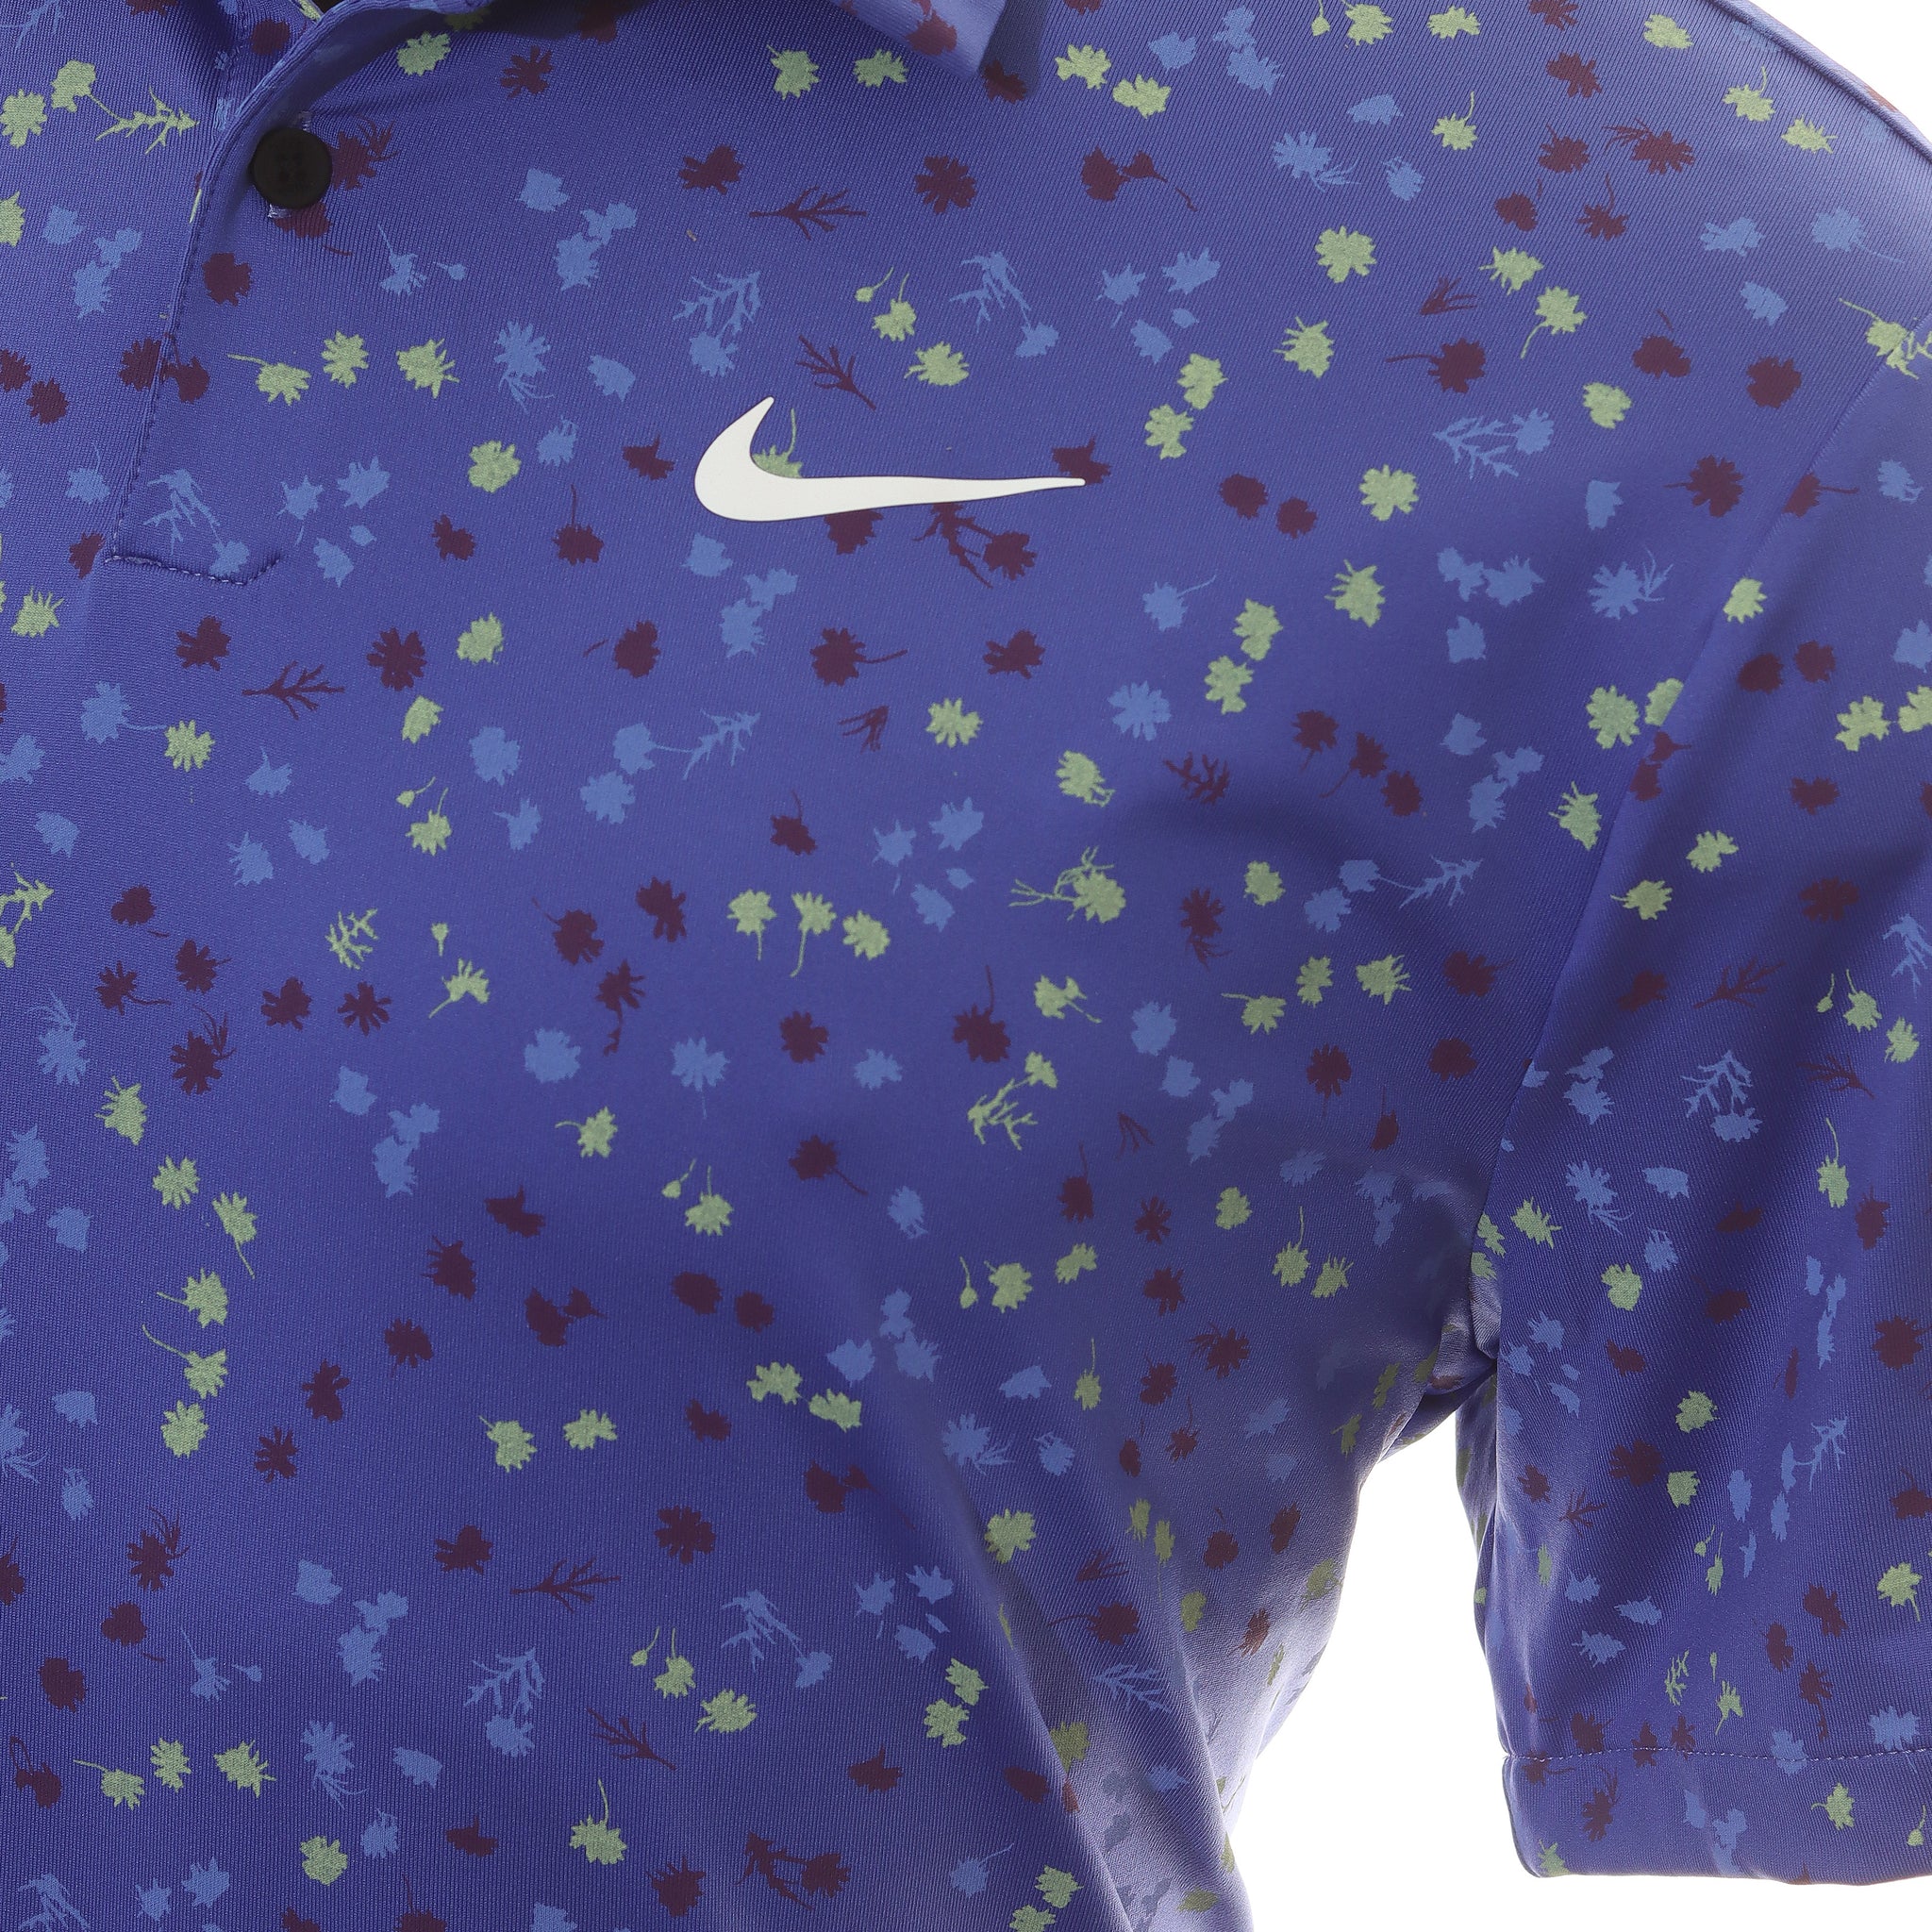 Nike Golf Dri-Fit Tour Micro Floral Shirt